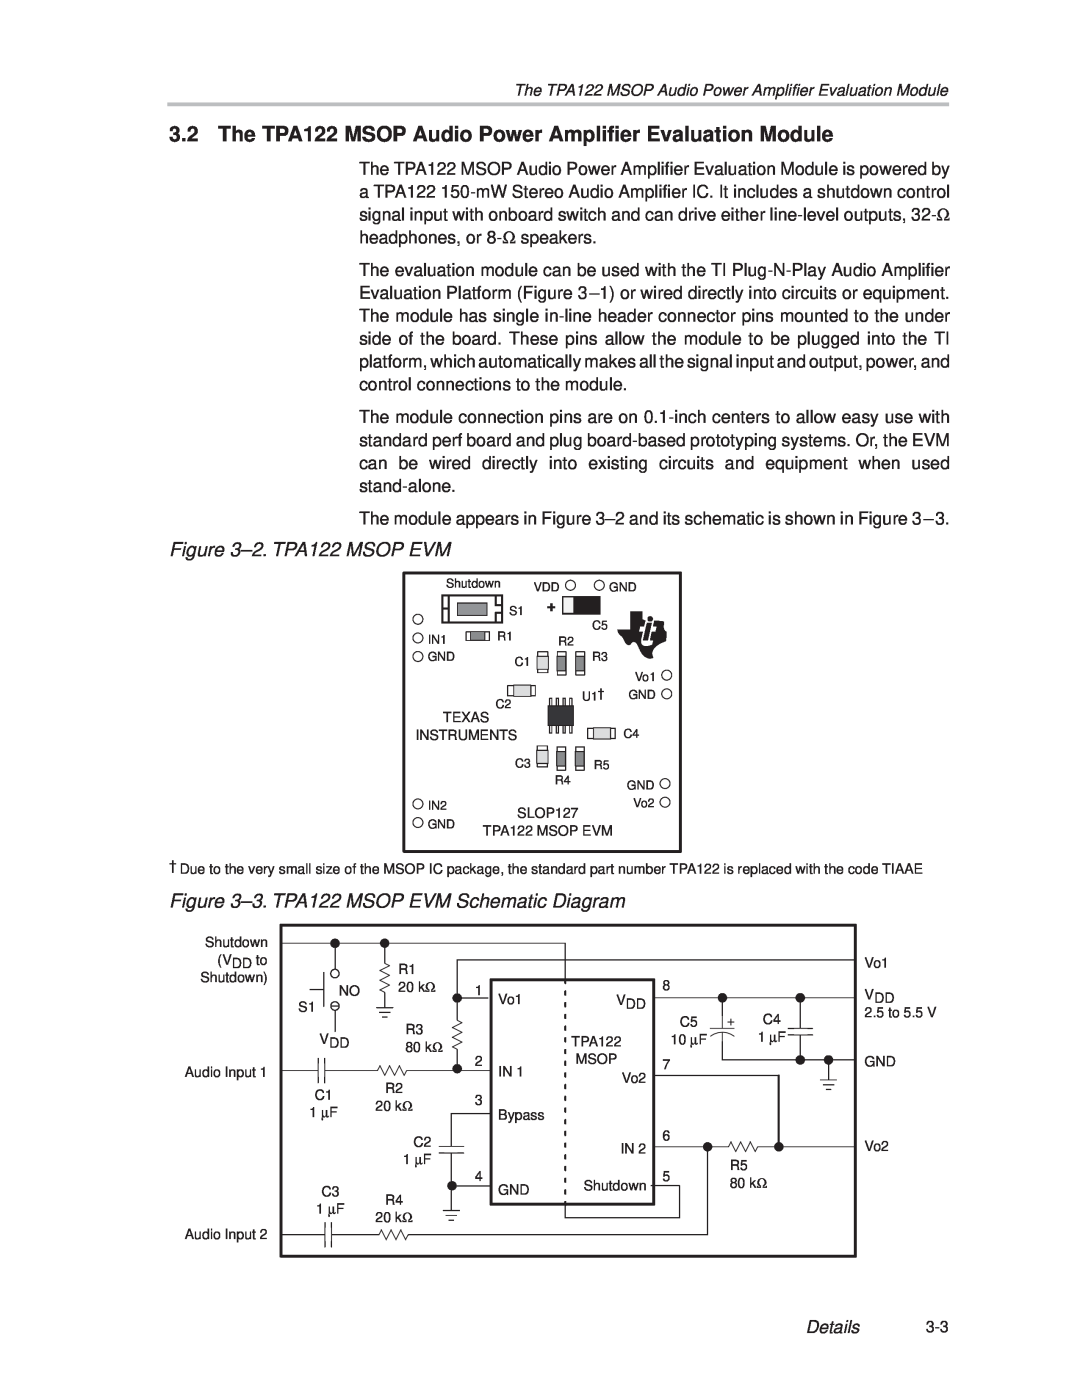 Texas Instruments SLOU025 manual ±2. TPA122 MSOP EVM, ±3. TPA122 MSOP EVM Schematic Diagram, Details 